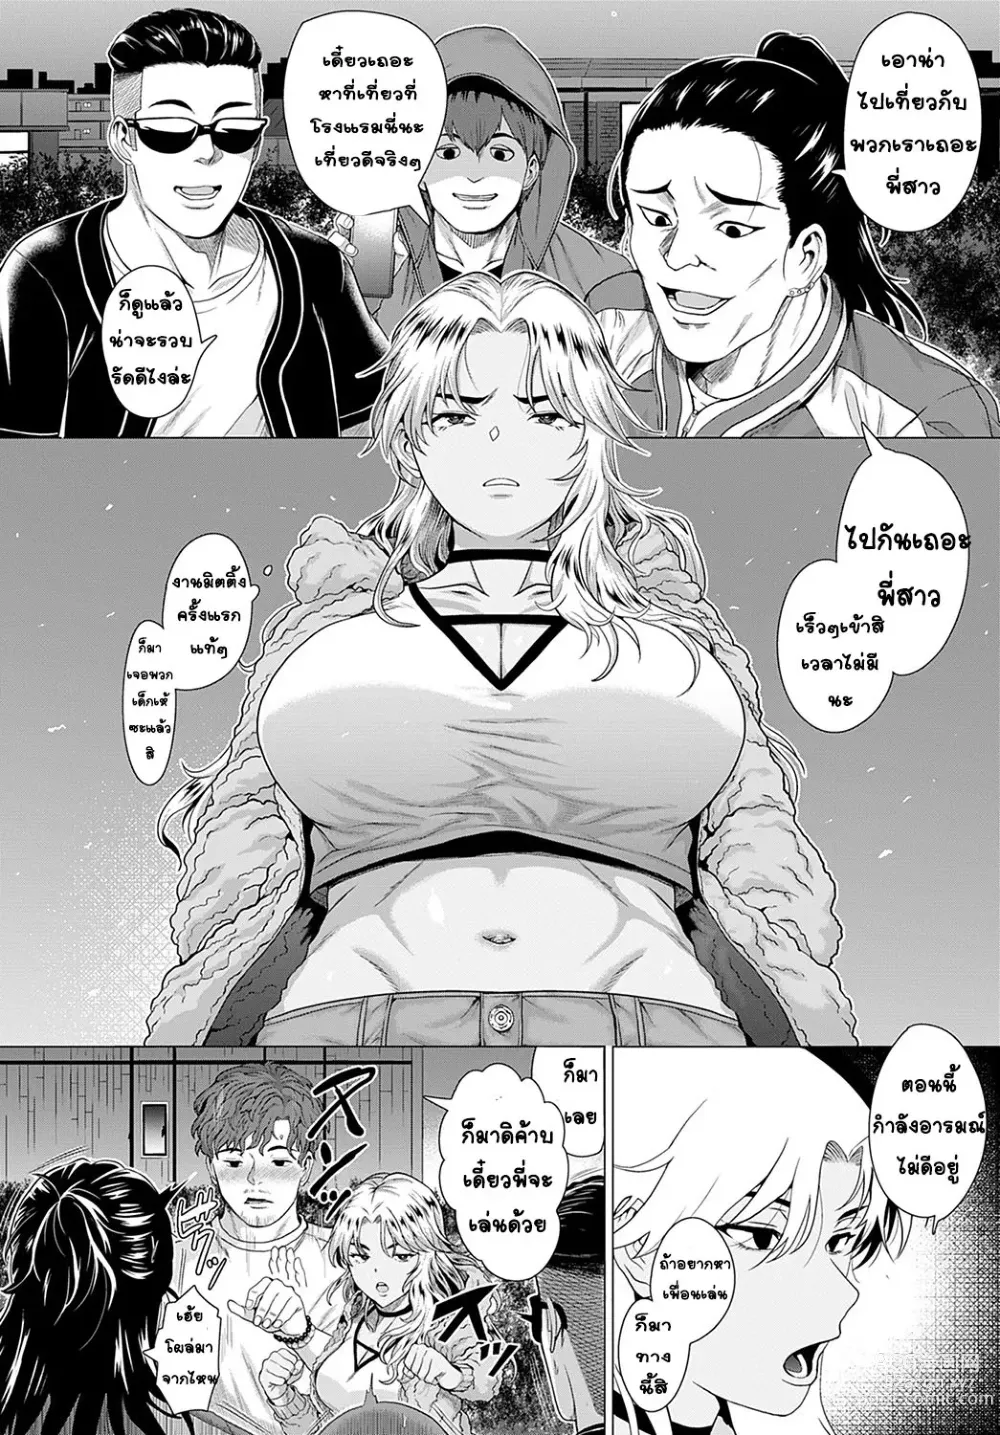 Page 4 of manga Douzo, Okawarinaku.